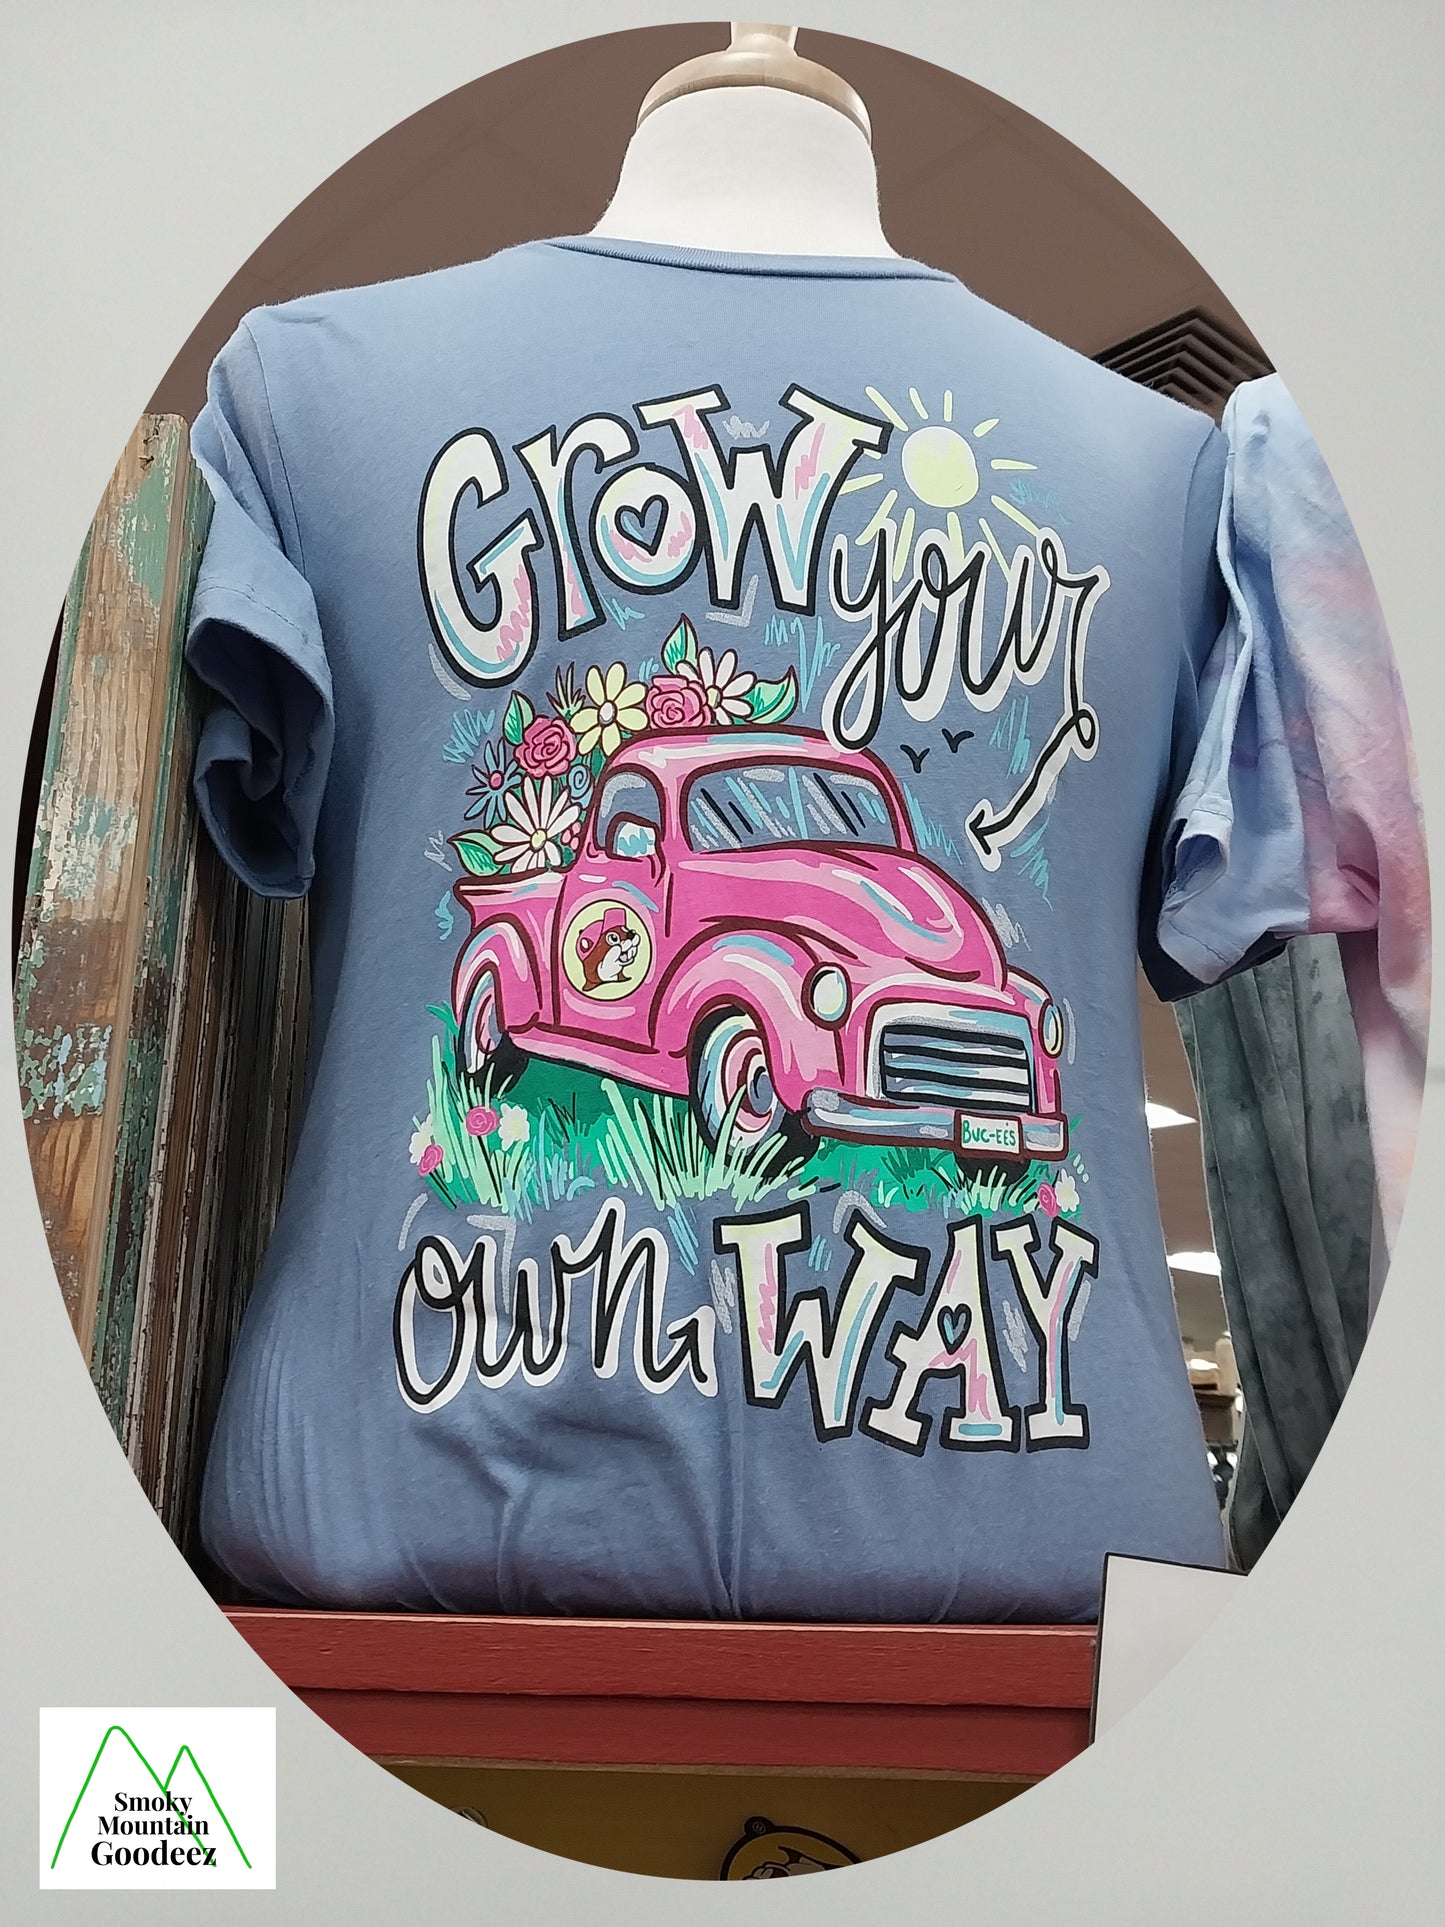 Buc-ee's "Grow Your Own Way" T-shirt